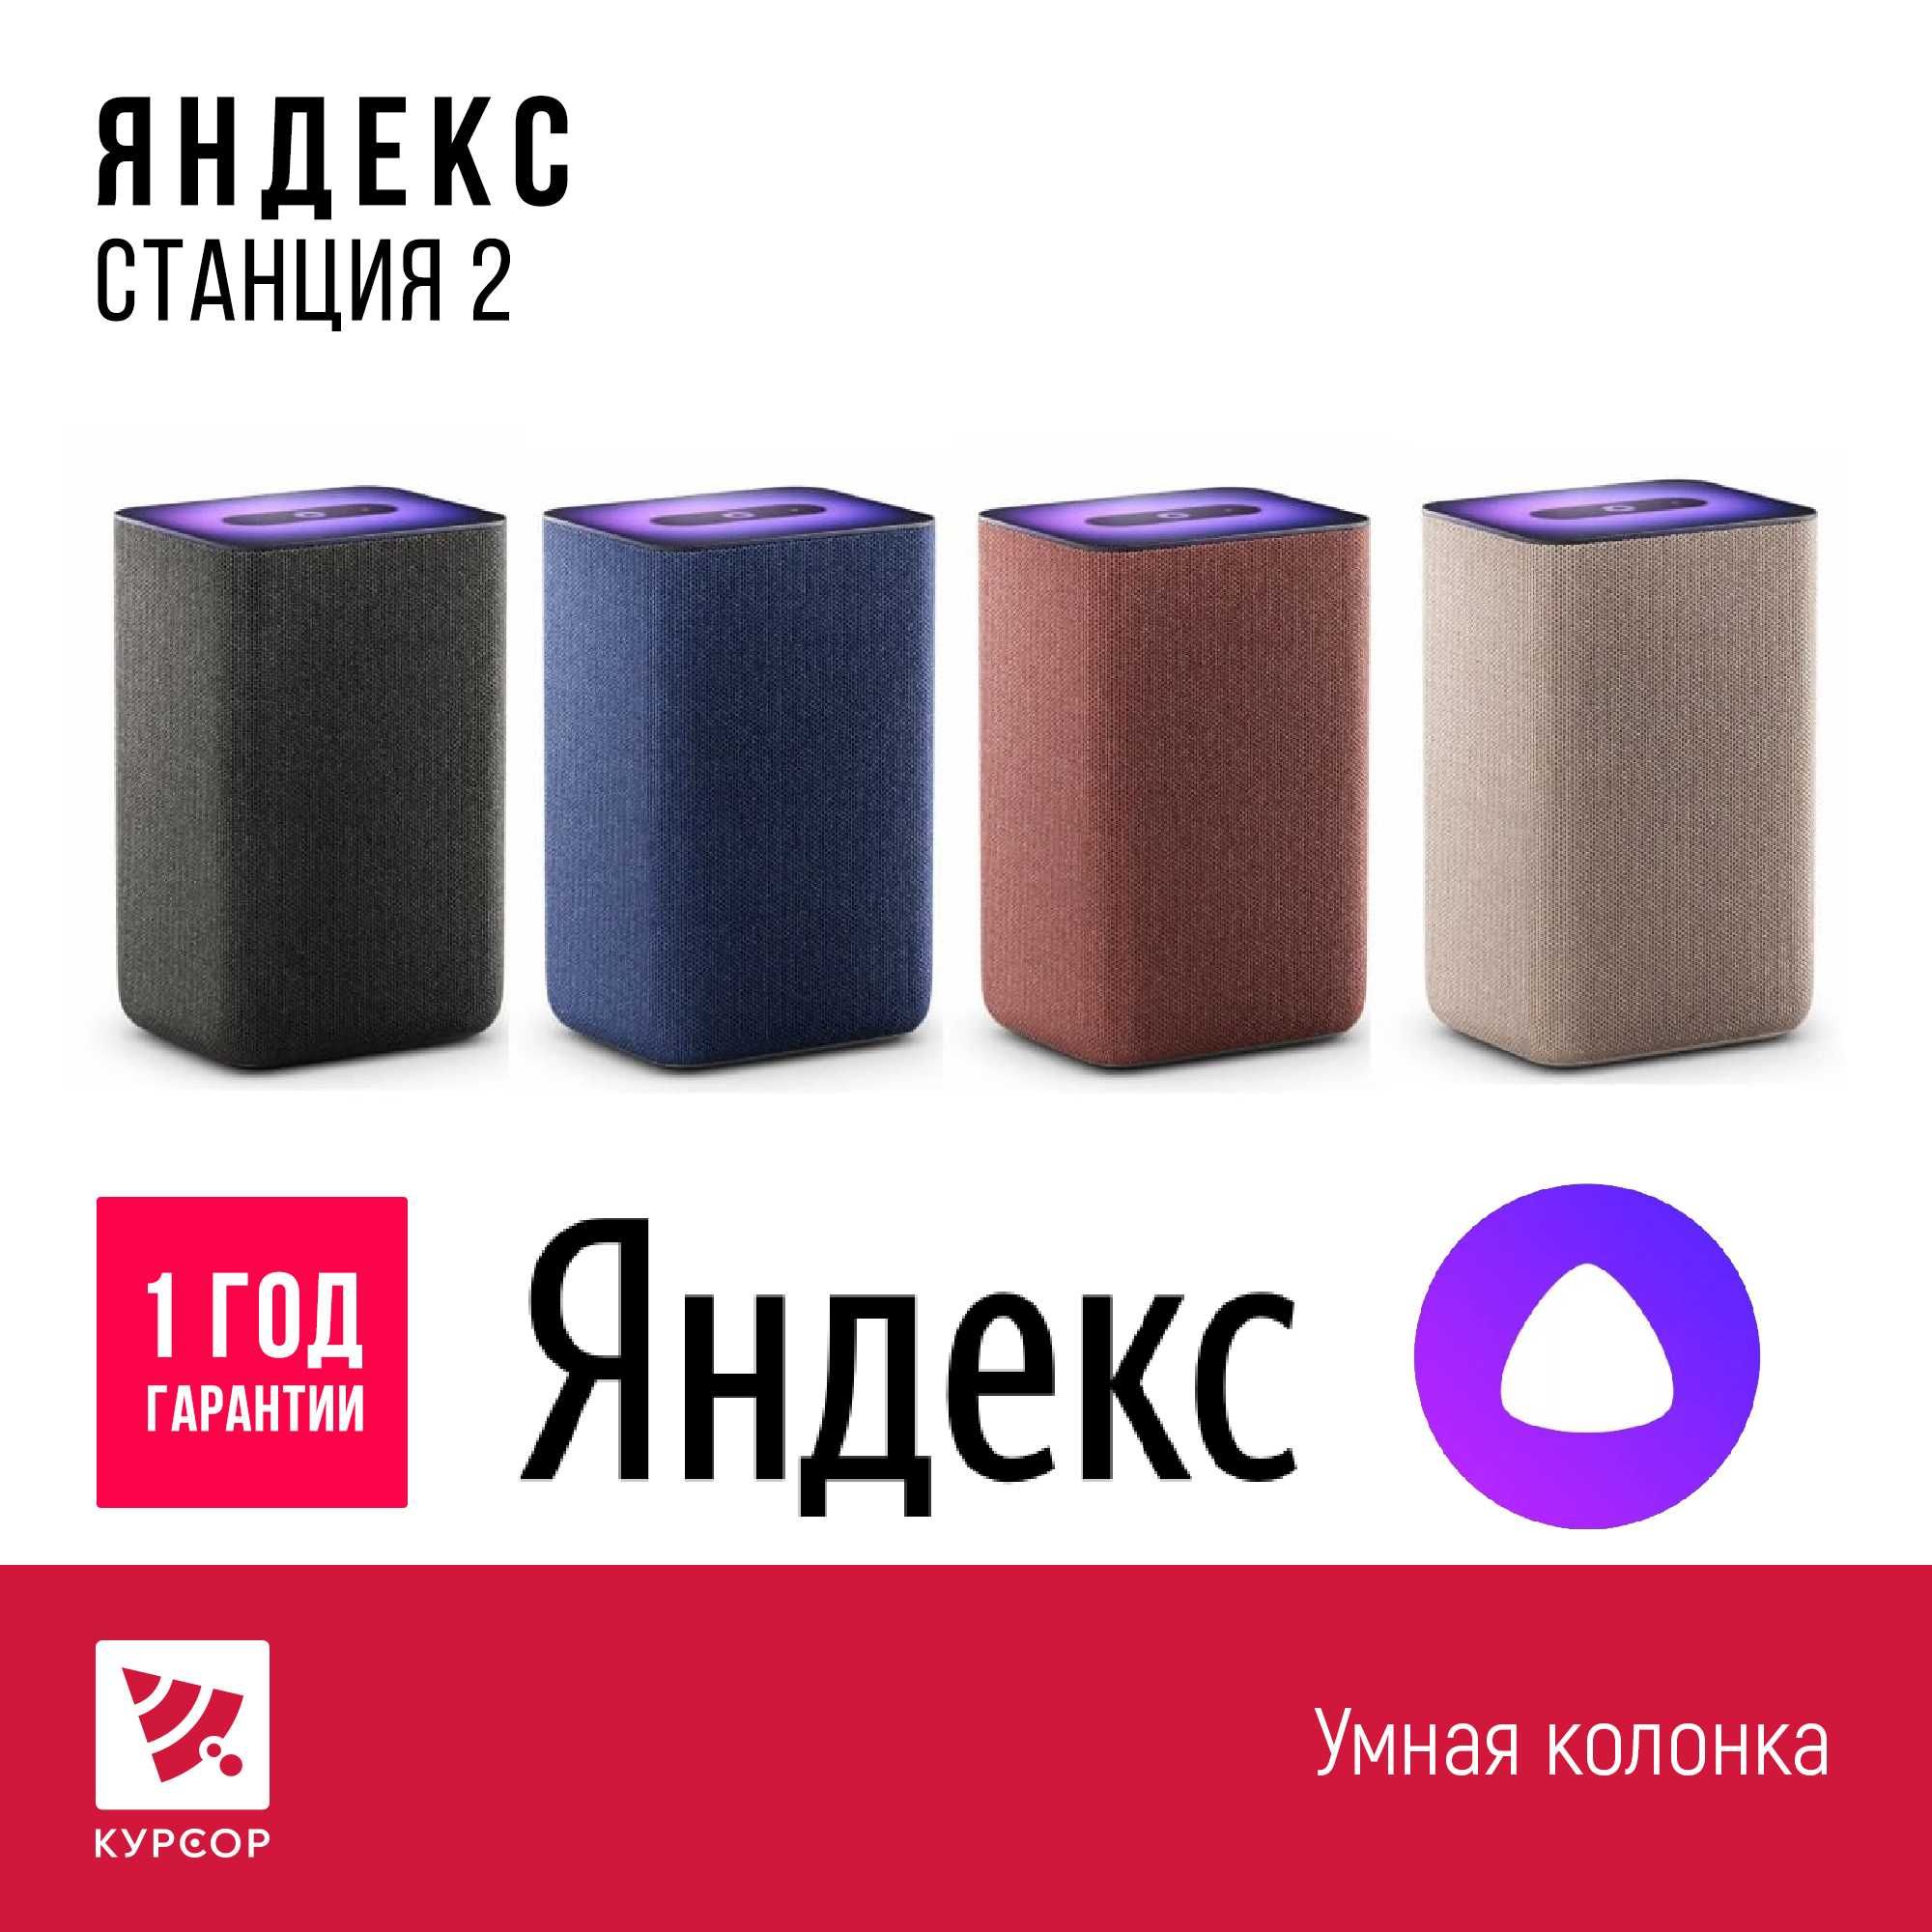 Курсор Яндекс Станция 2 с Алисой, умная колонка,Zigbee,супер цена!